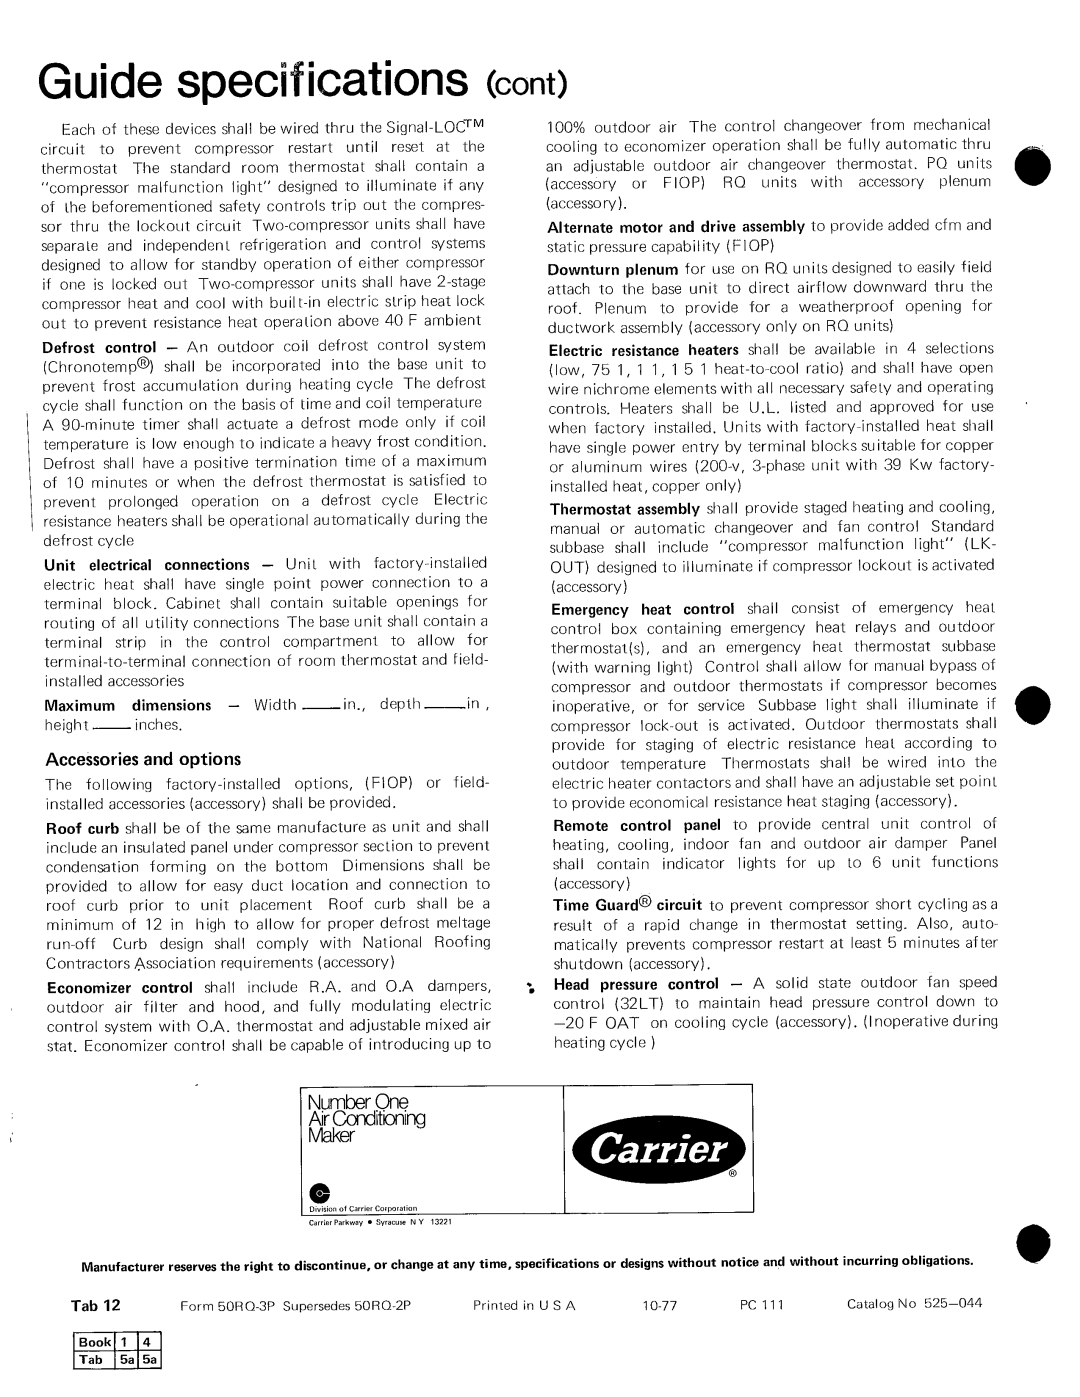 Carrier 50RQ manual 